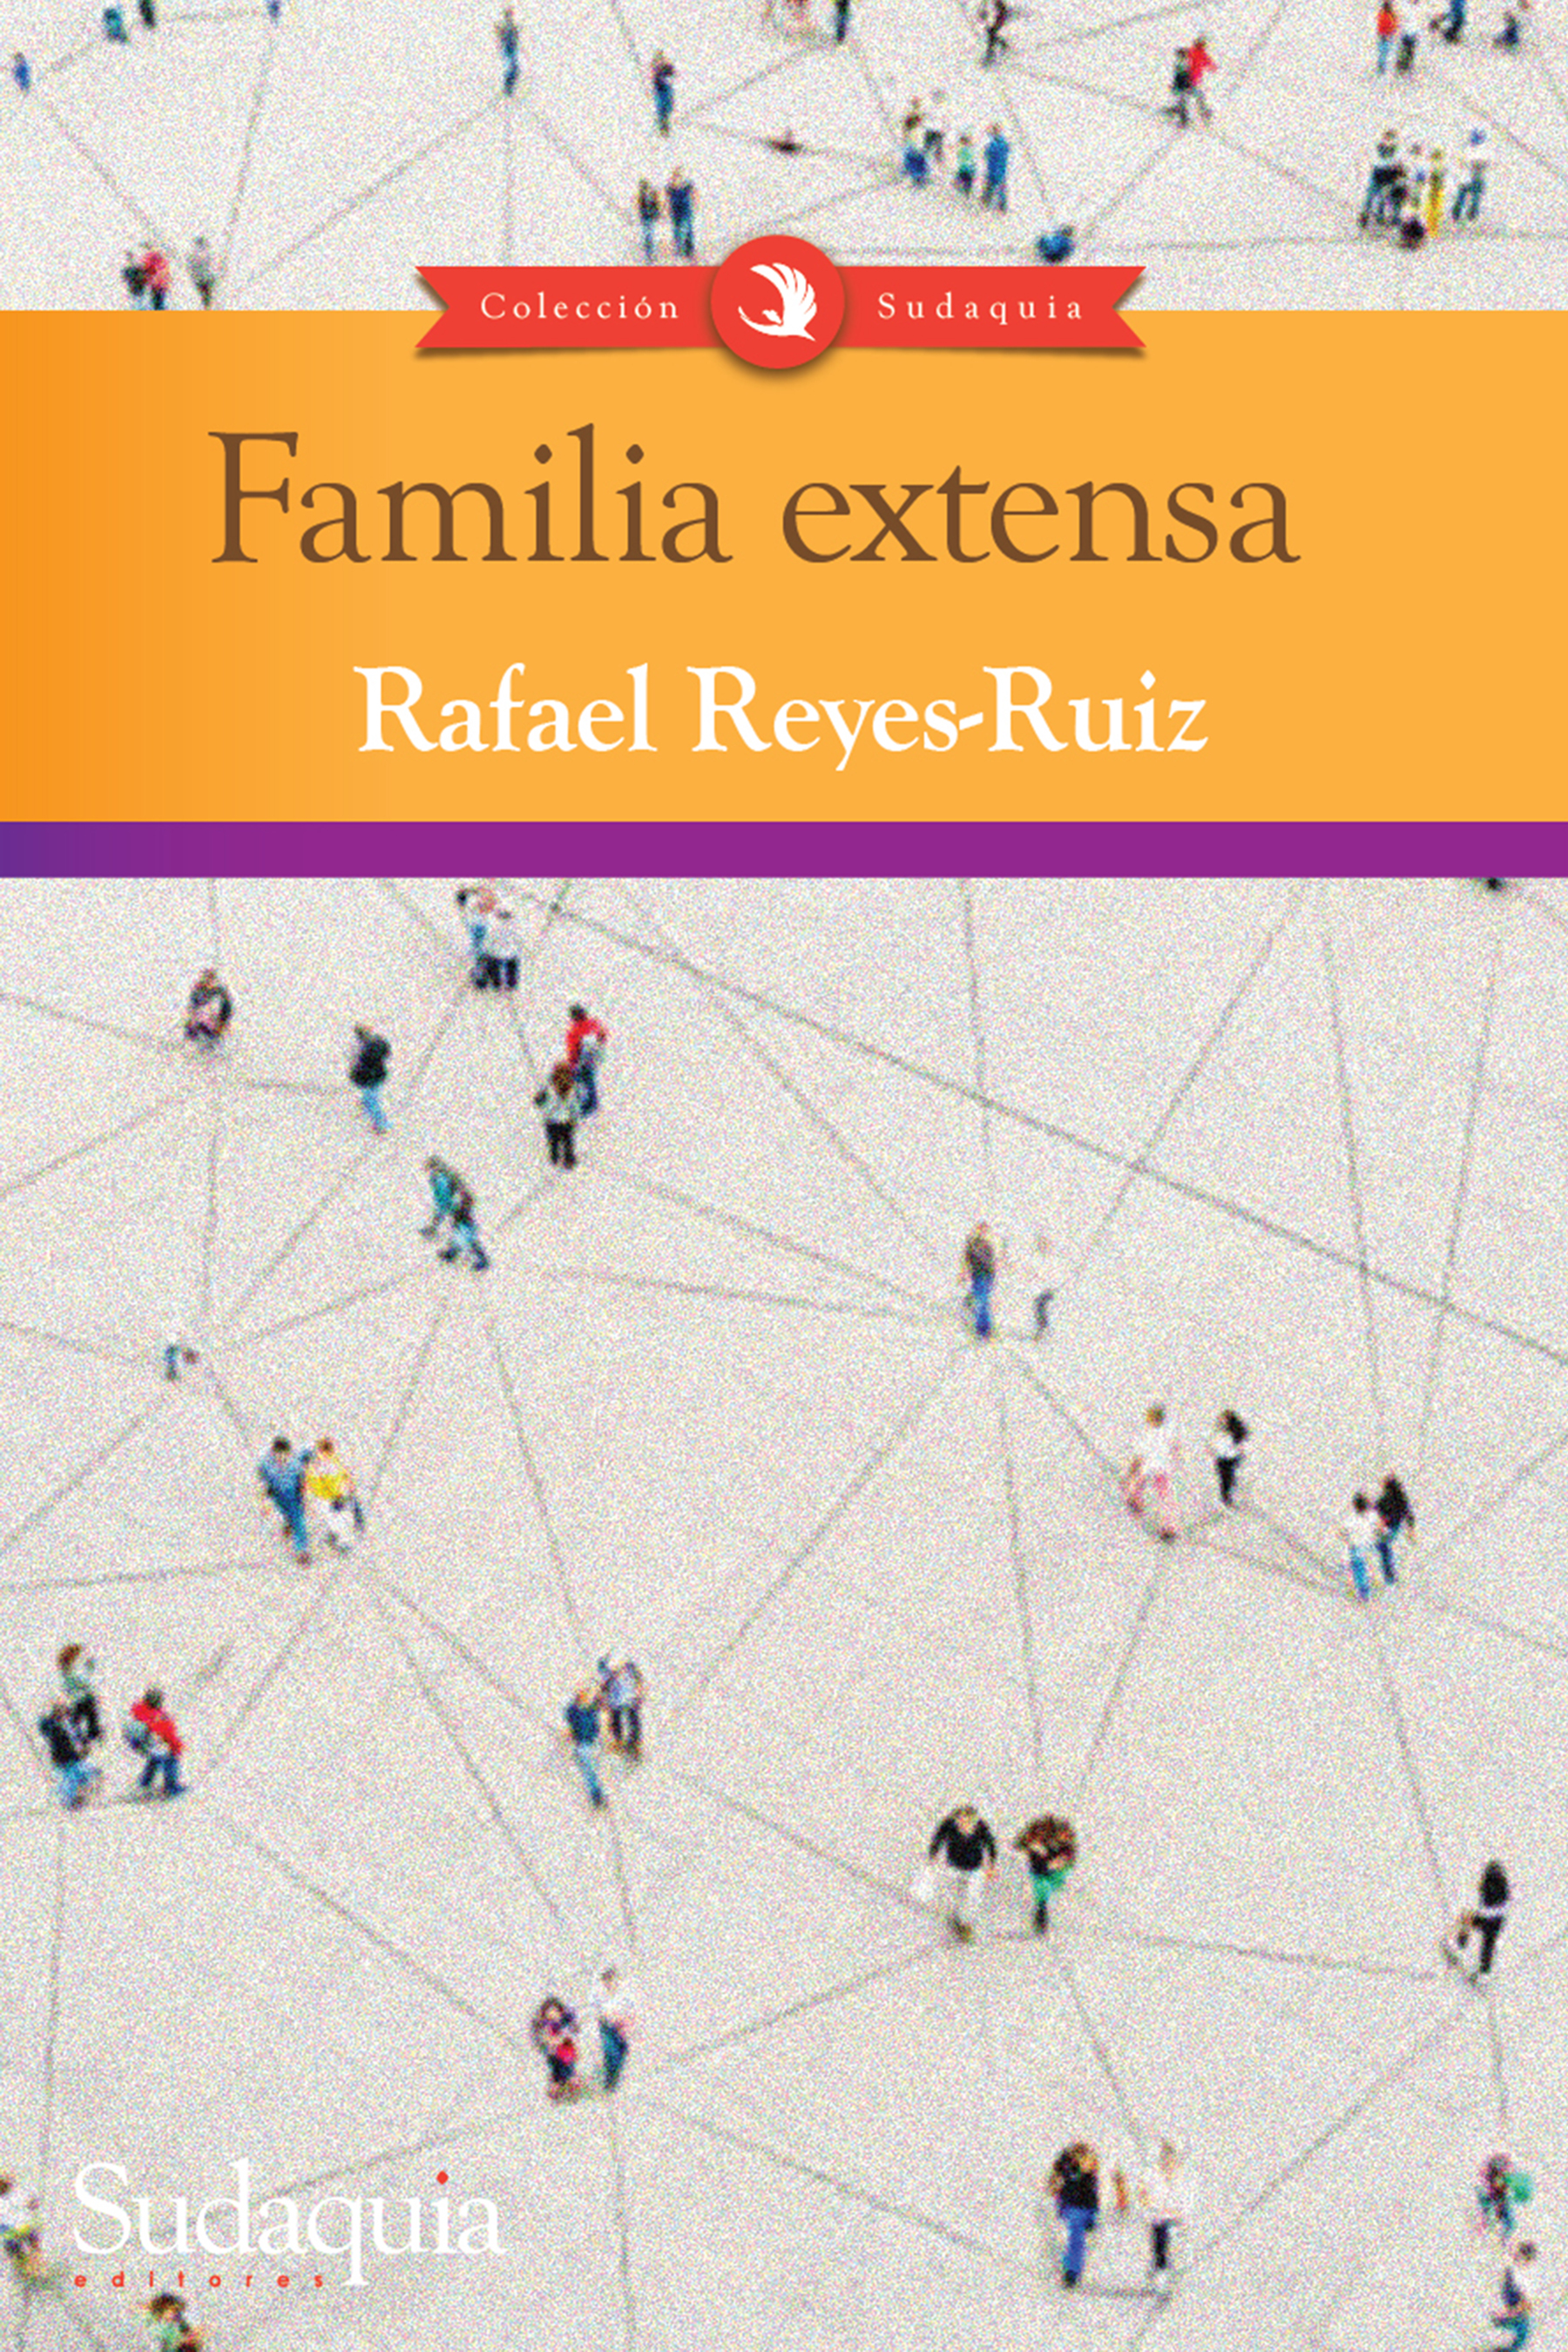 Familia extensa book cover